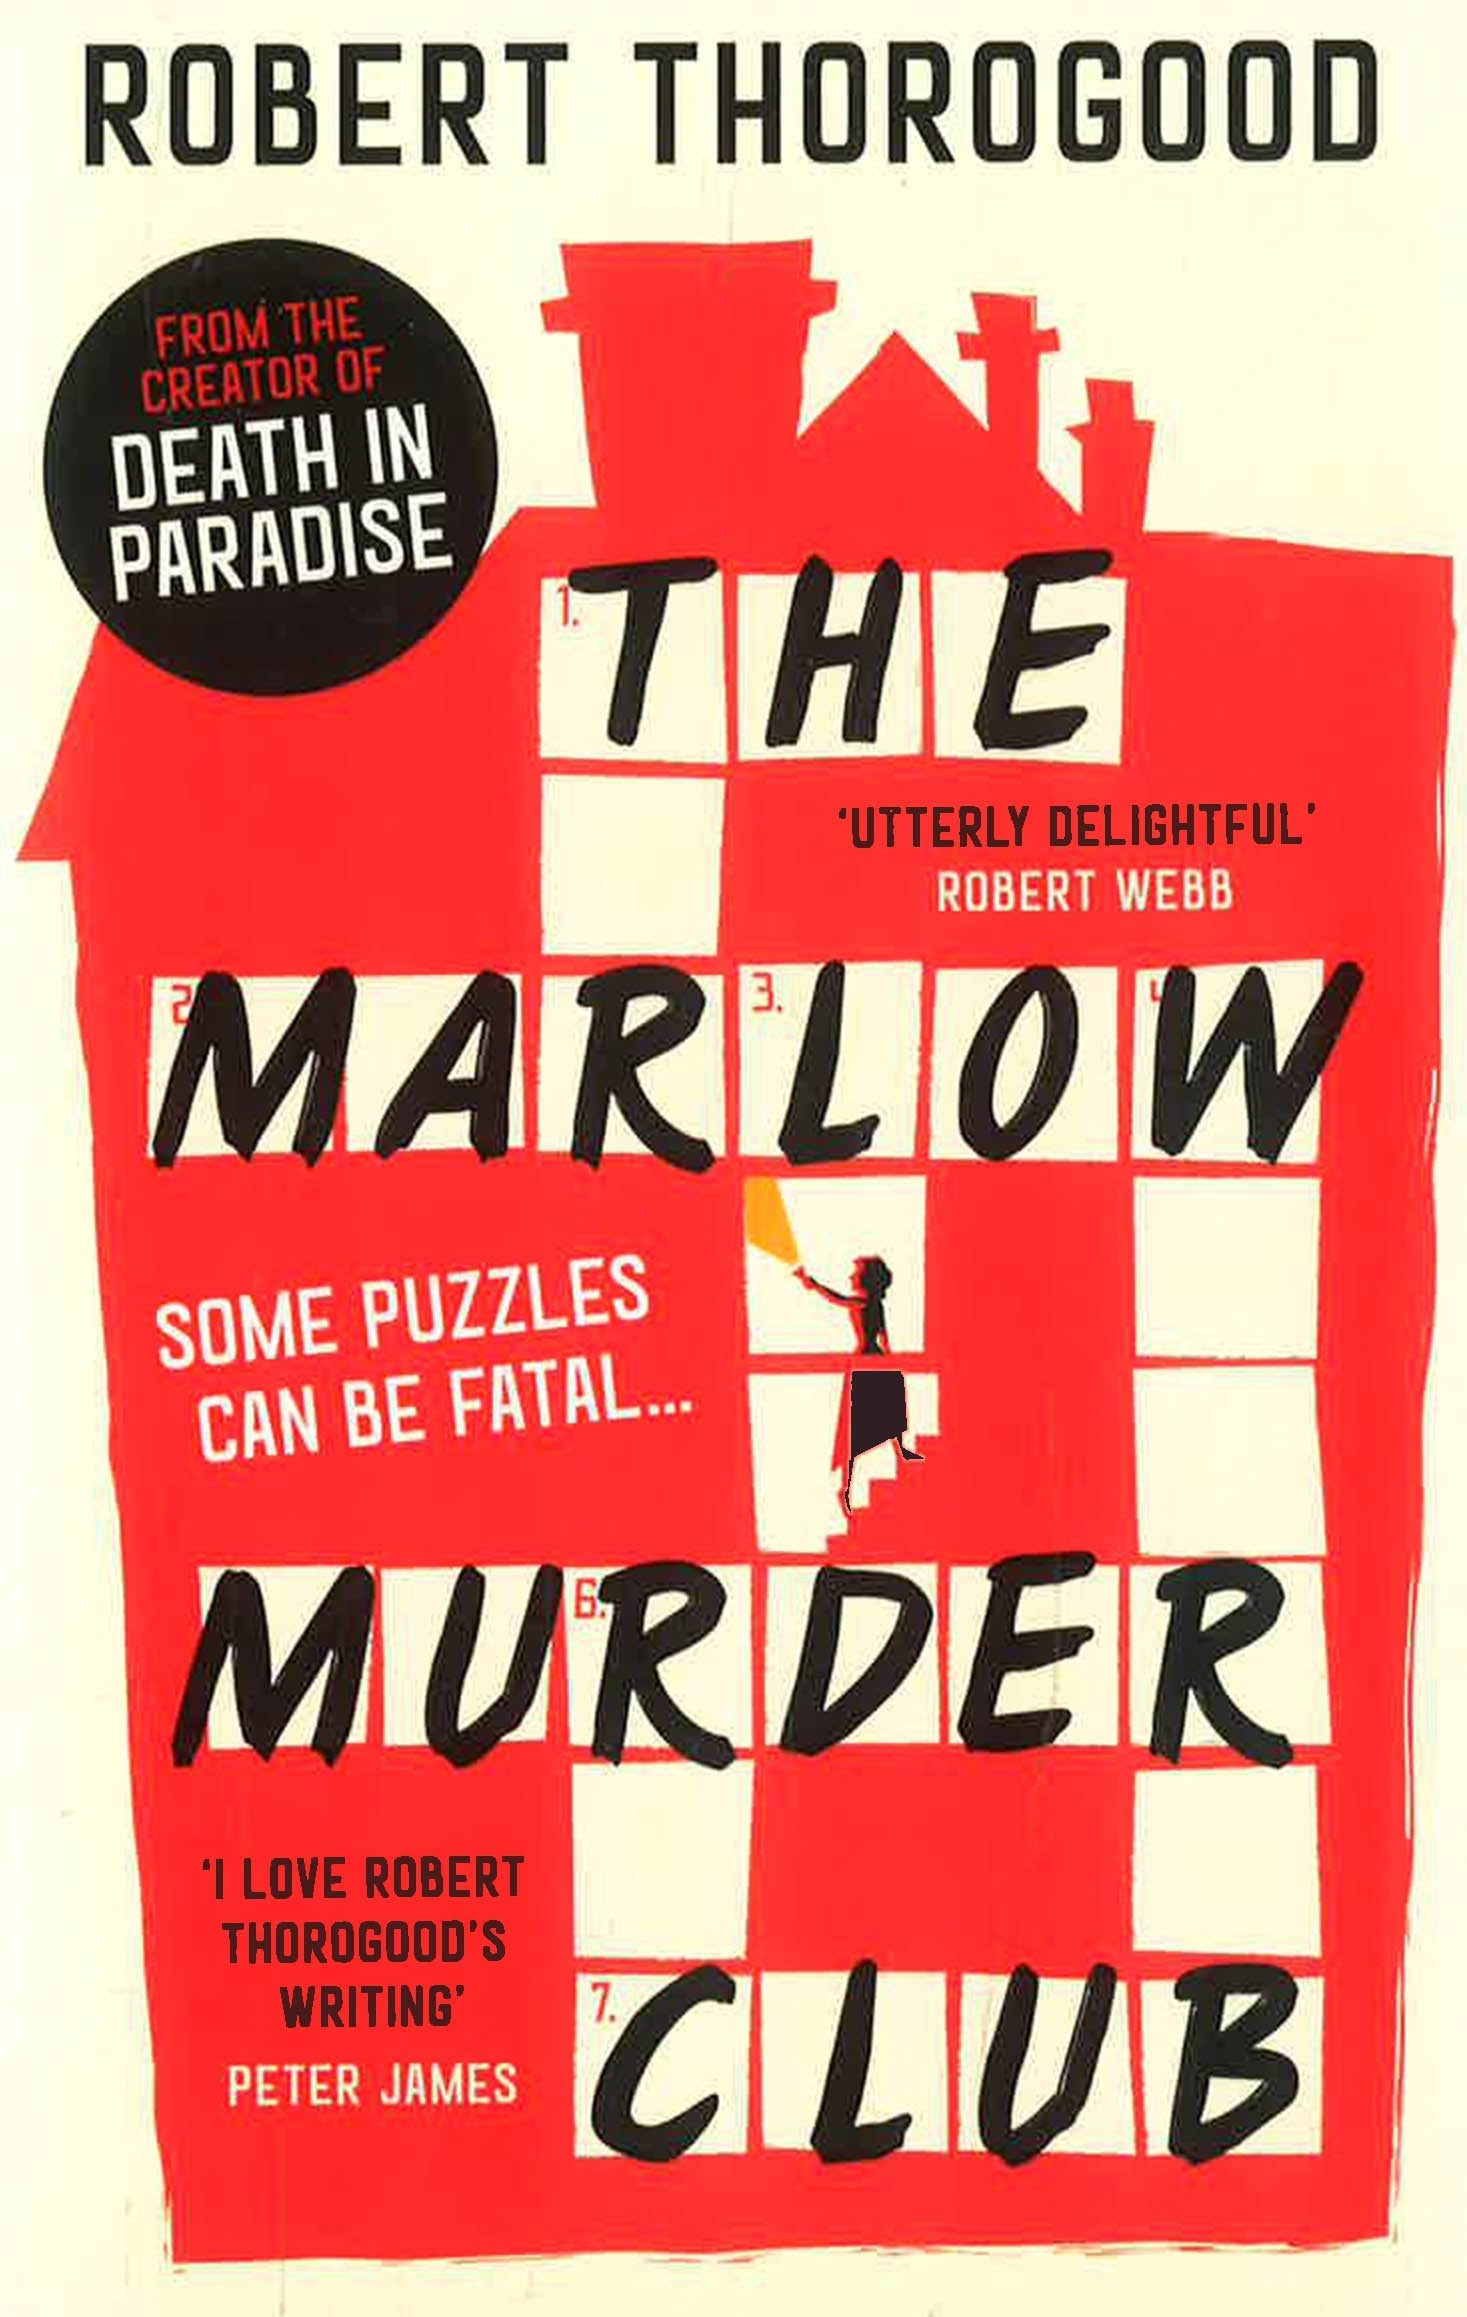 The Marlow Murder Club [Book]